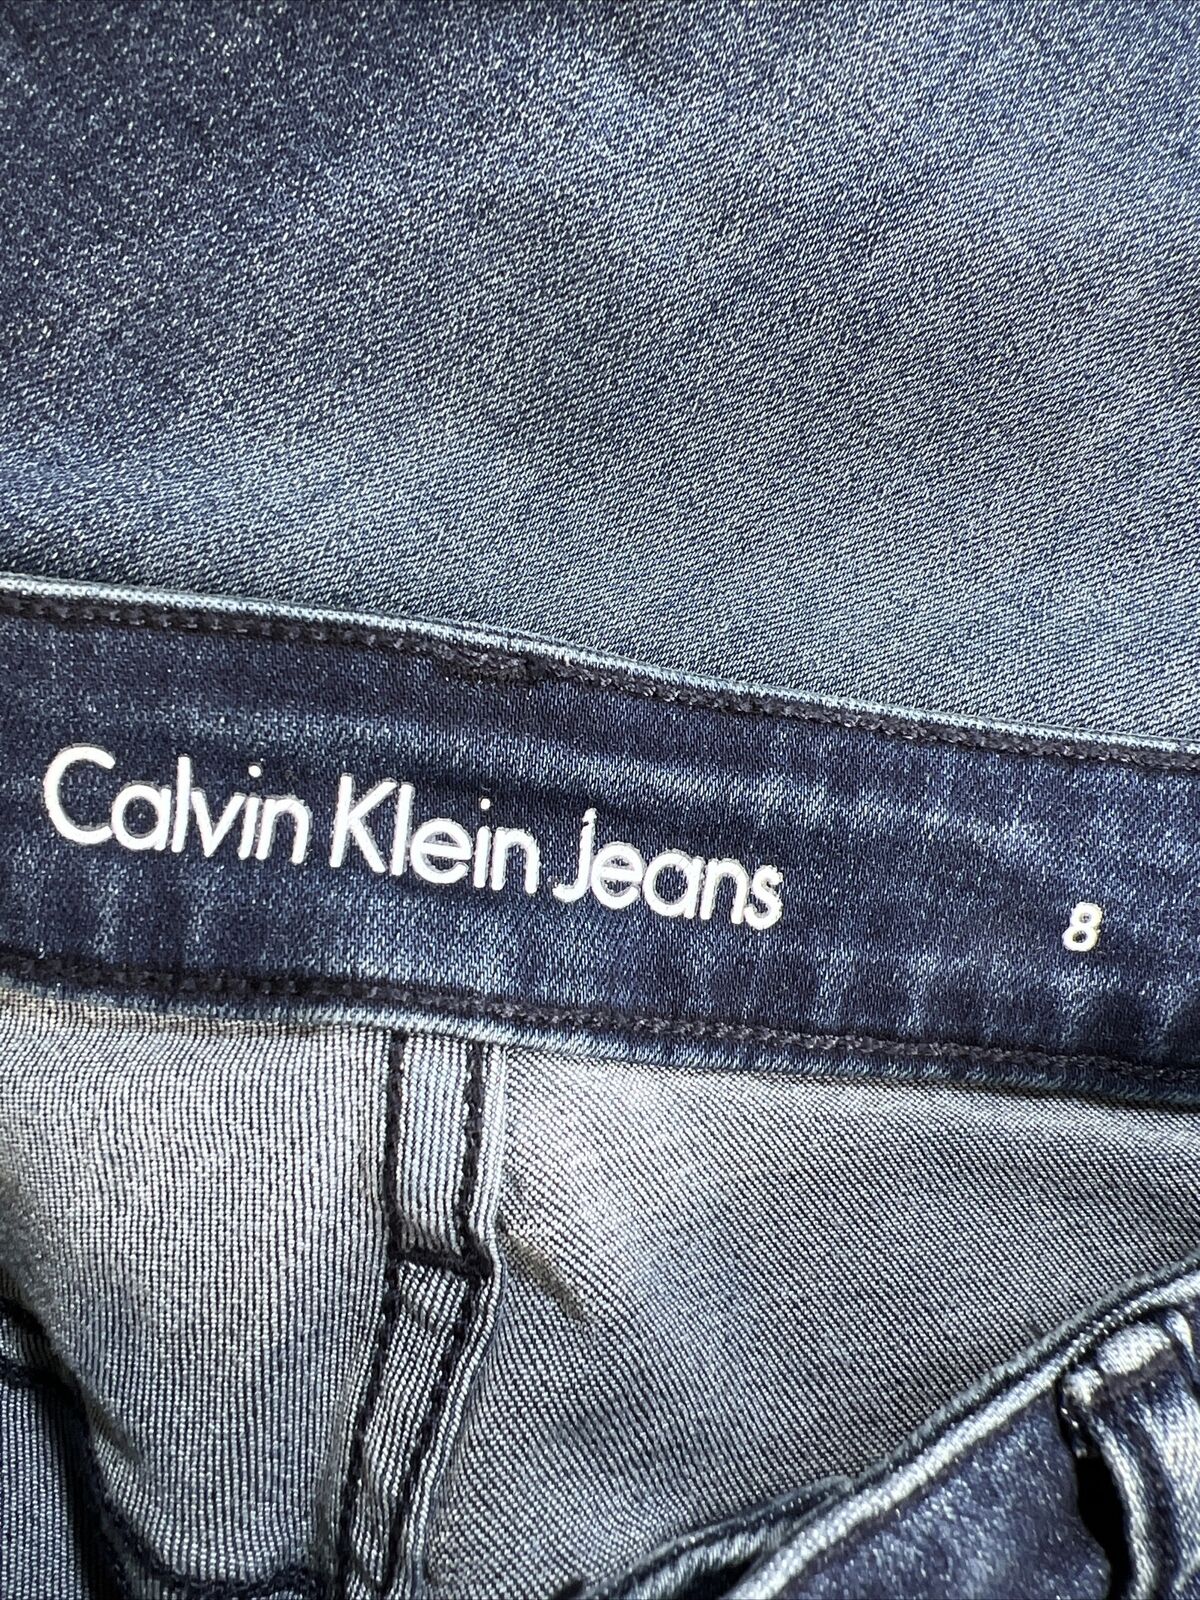 Calvin Klein Women's Medium Wash City Shorts - 8